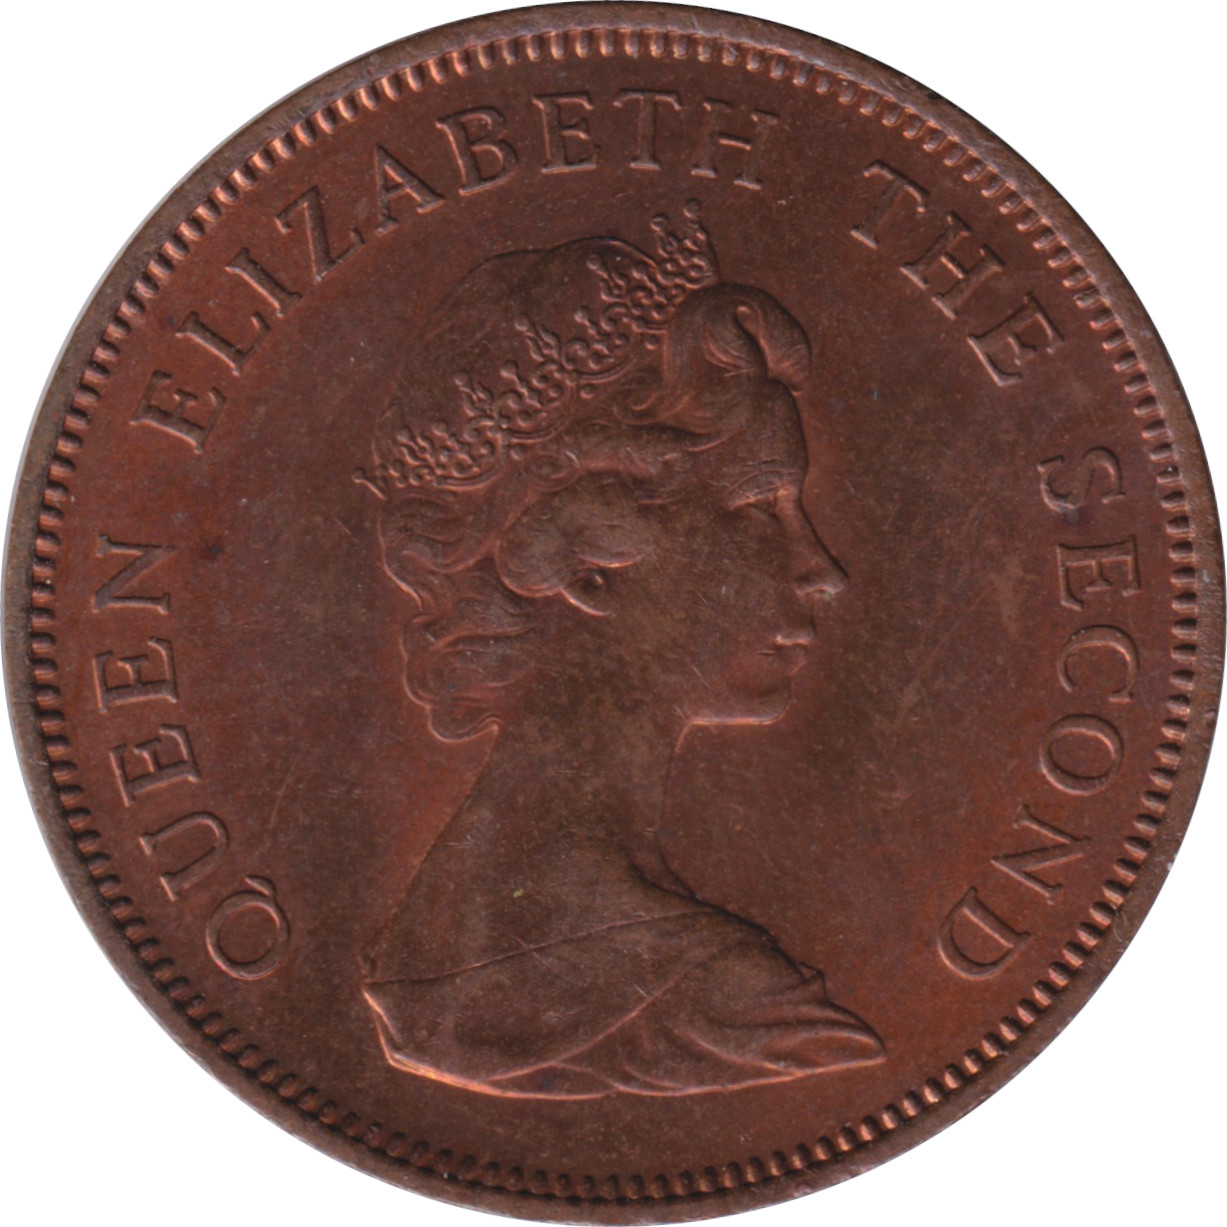 2 pence - Elizabeth II - Buste jeune - New Pence